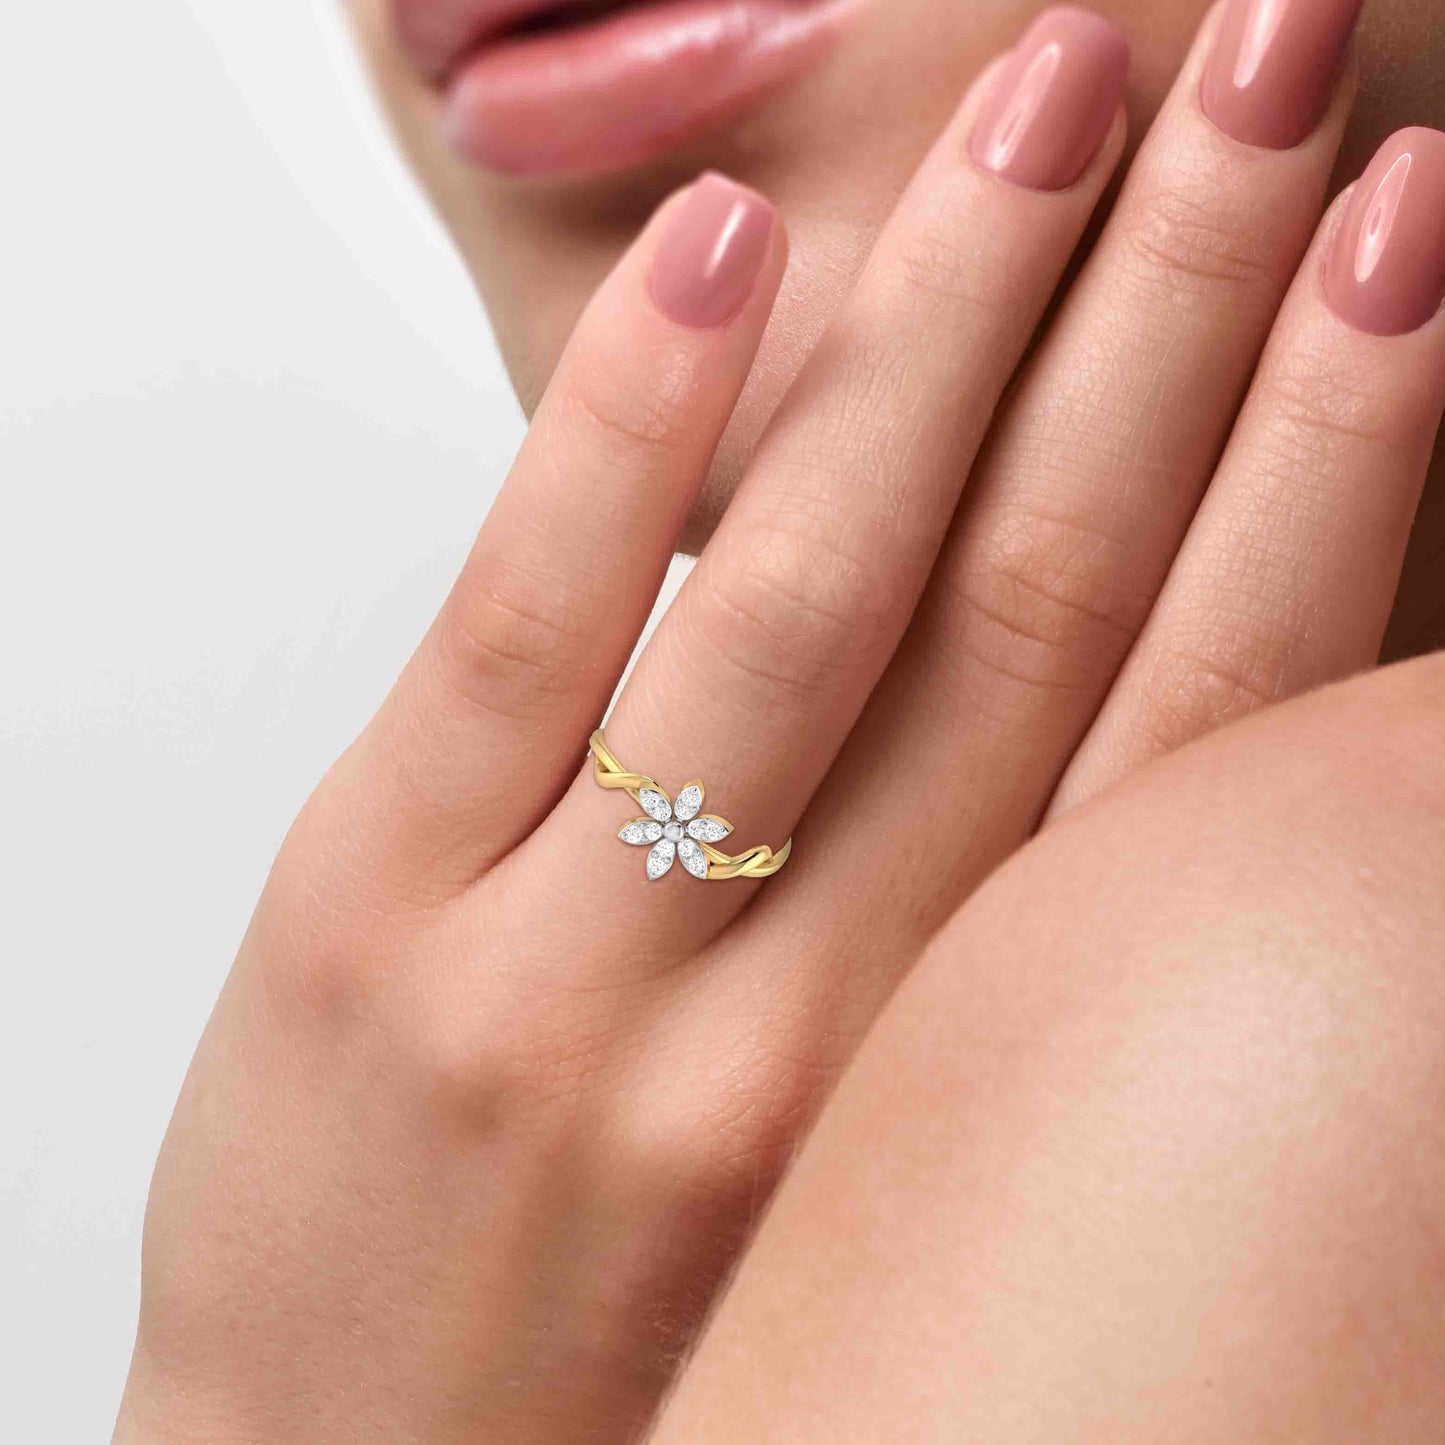 Amazing 0.60 Ct Off White Solitaire Diamond Massive Ring with Small Diamond  | eBay